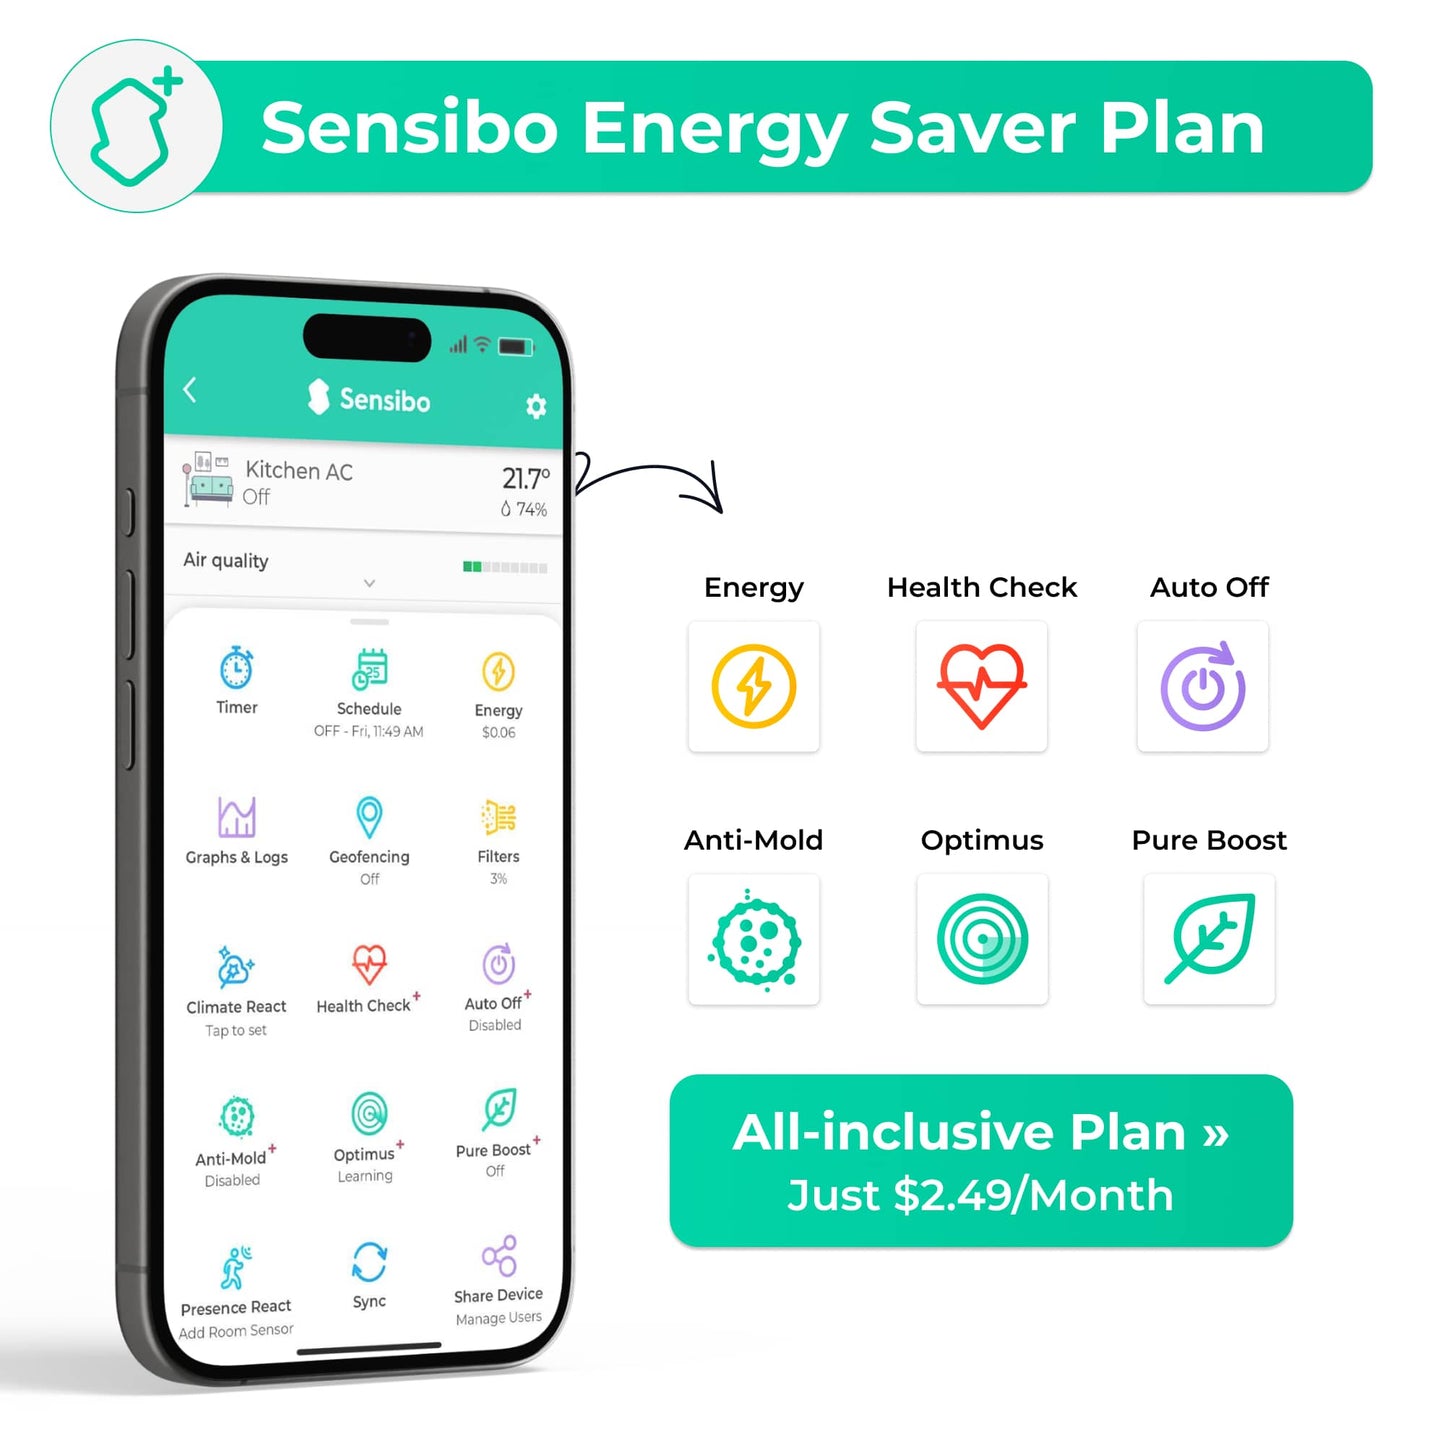 Sensibo Energy Saver Plan